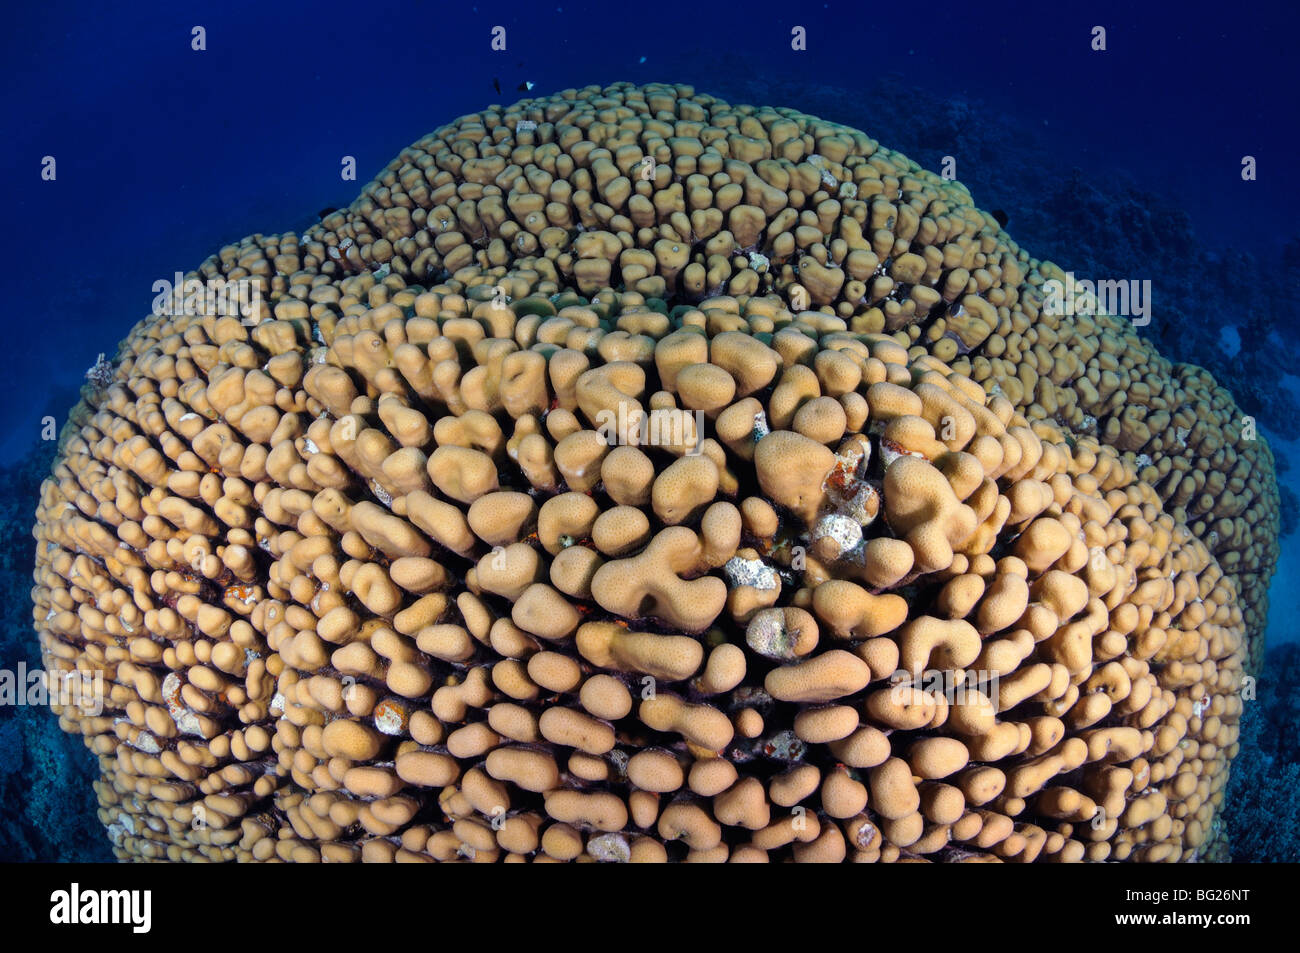 Large stoney Dome coral, Porites nodifera, in 'Red Sea' Stock Photo